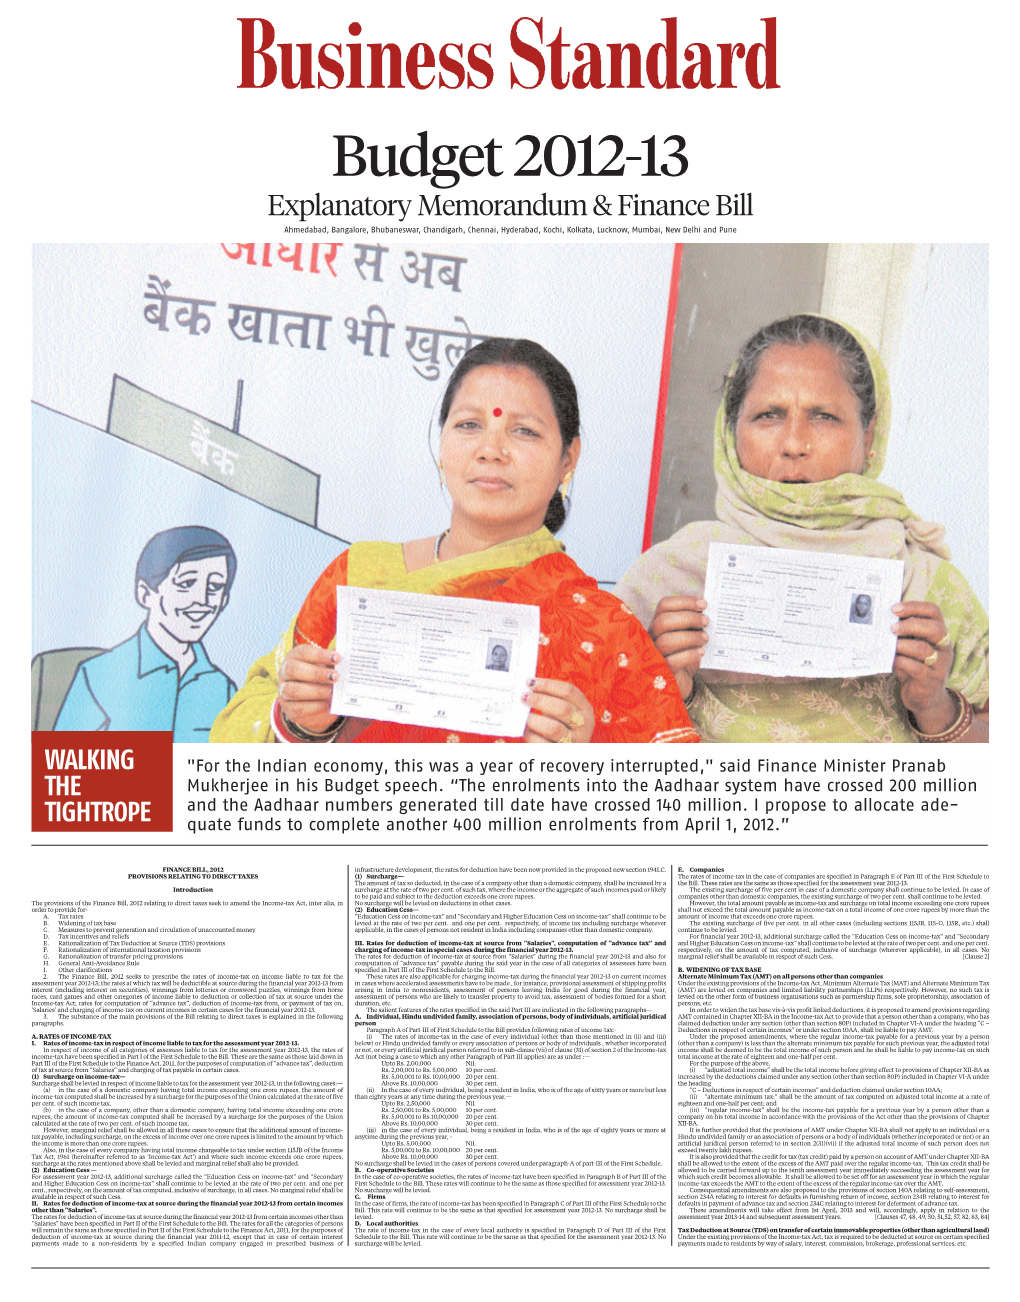 Budget 2012-13